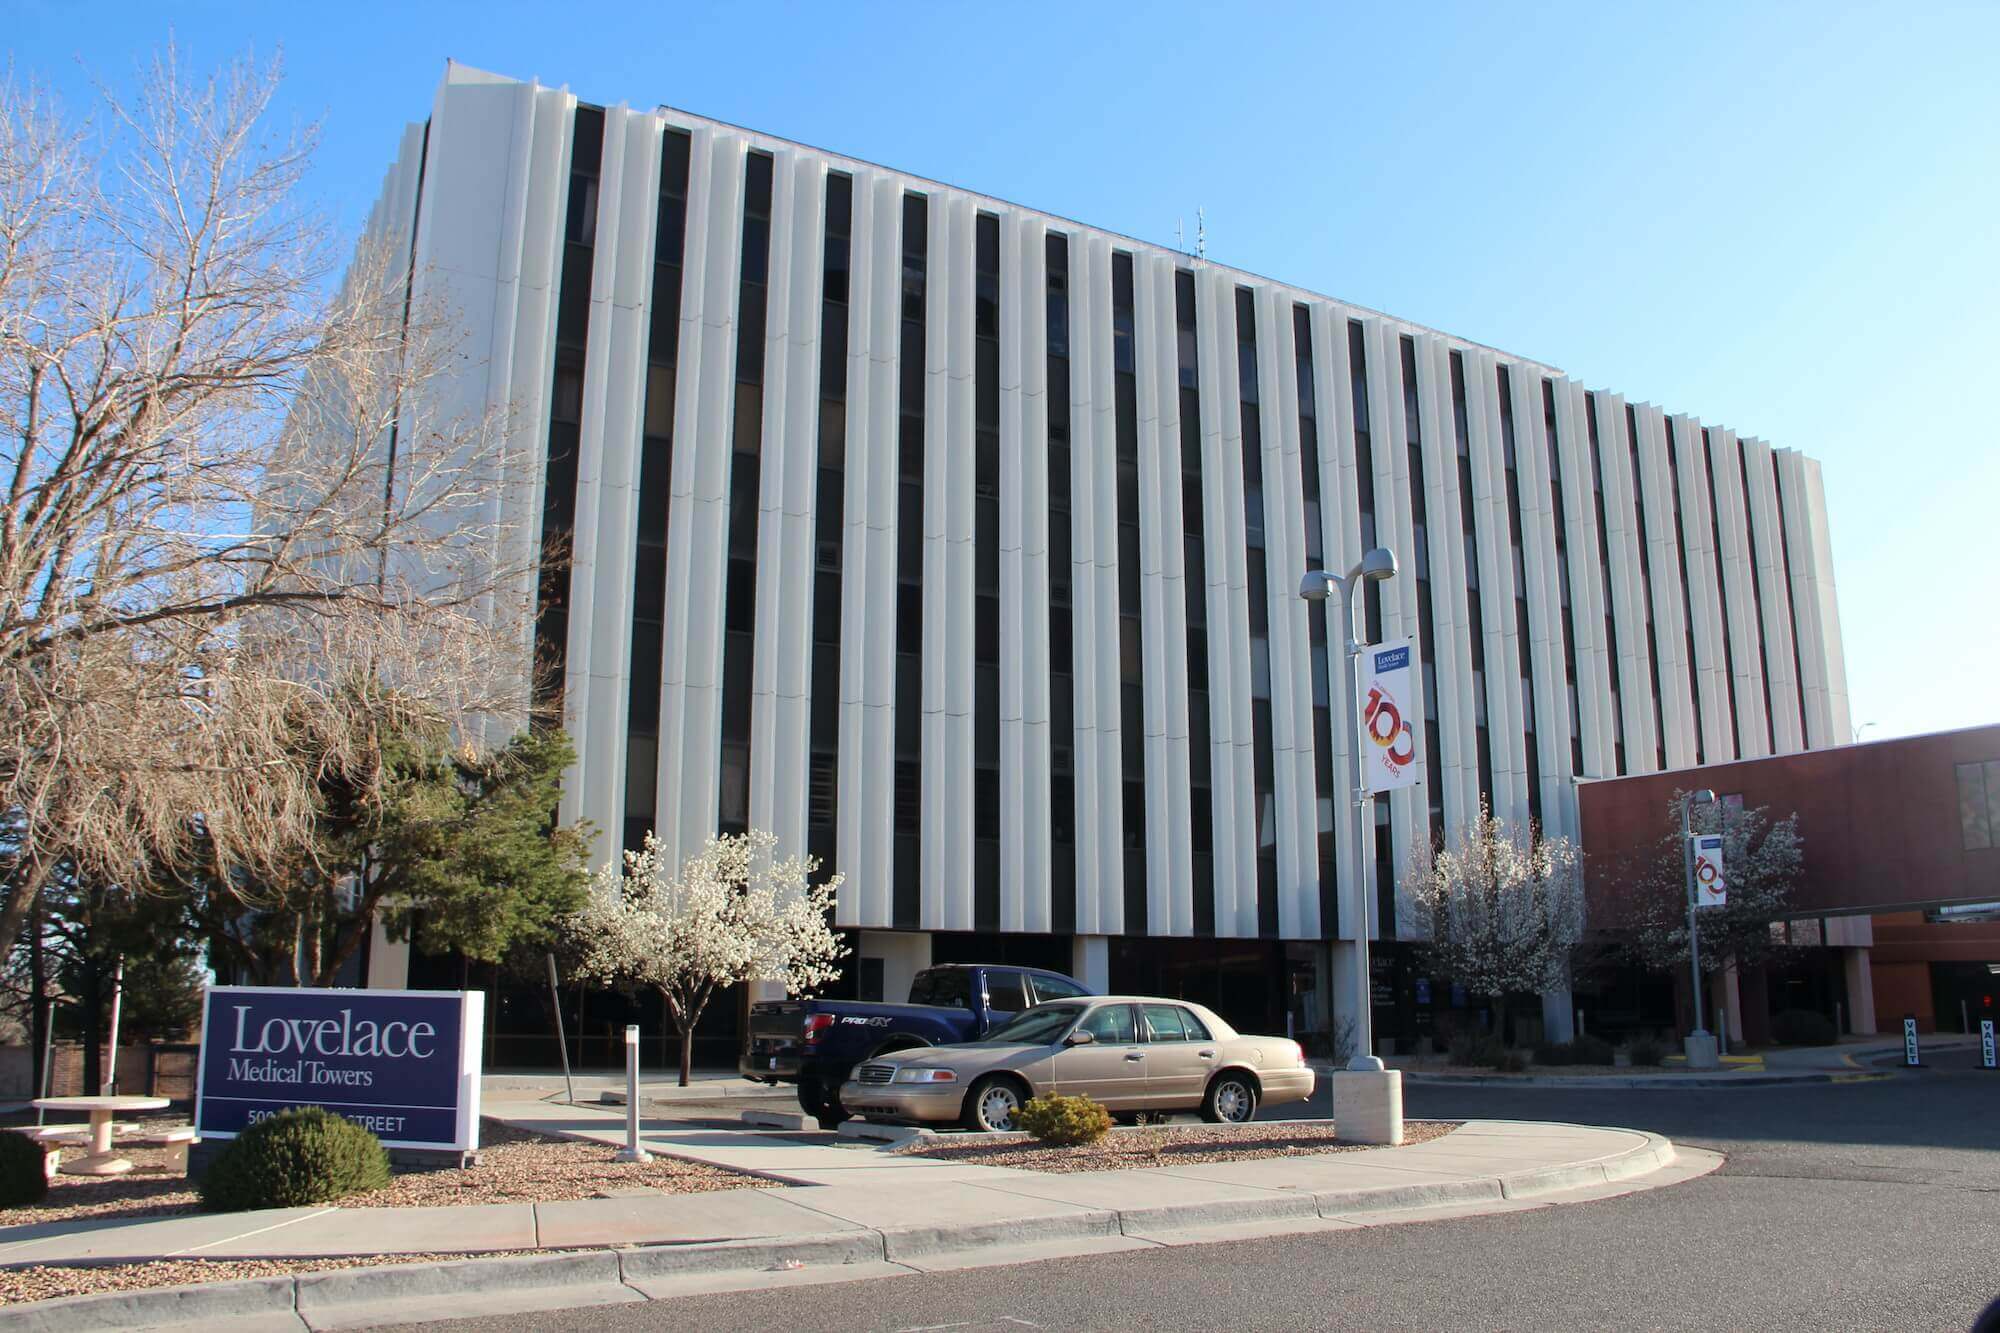 Picture of Lovelace Neurosciences Center 500 Walter St NE, Albuquerque, NM 87102